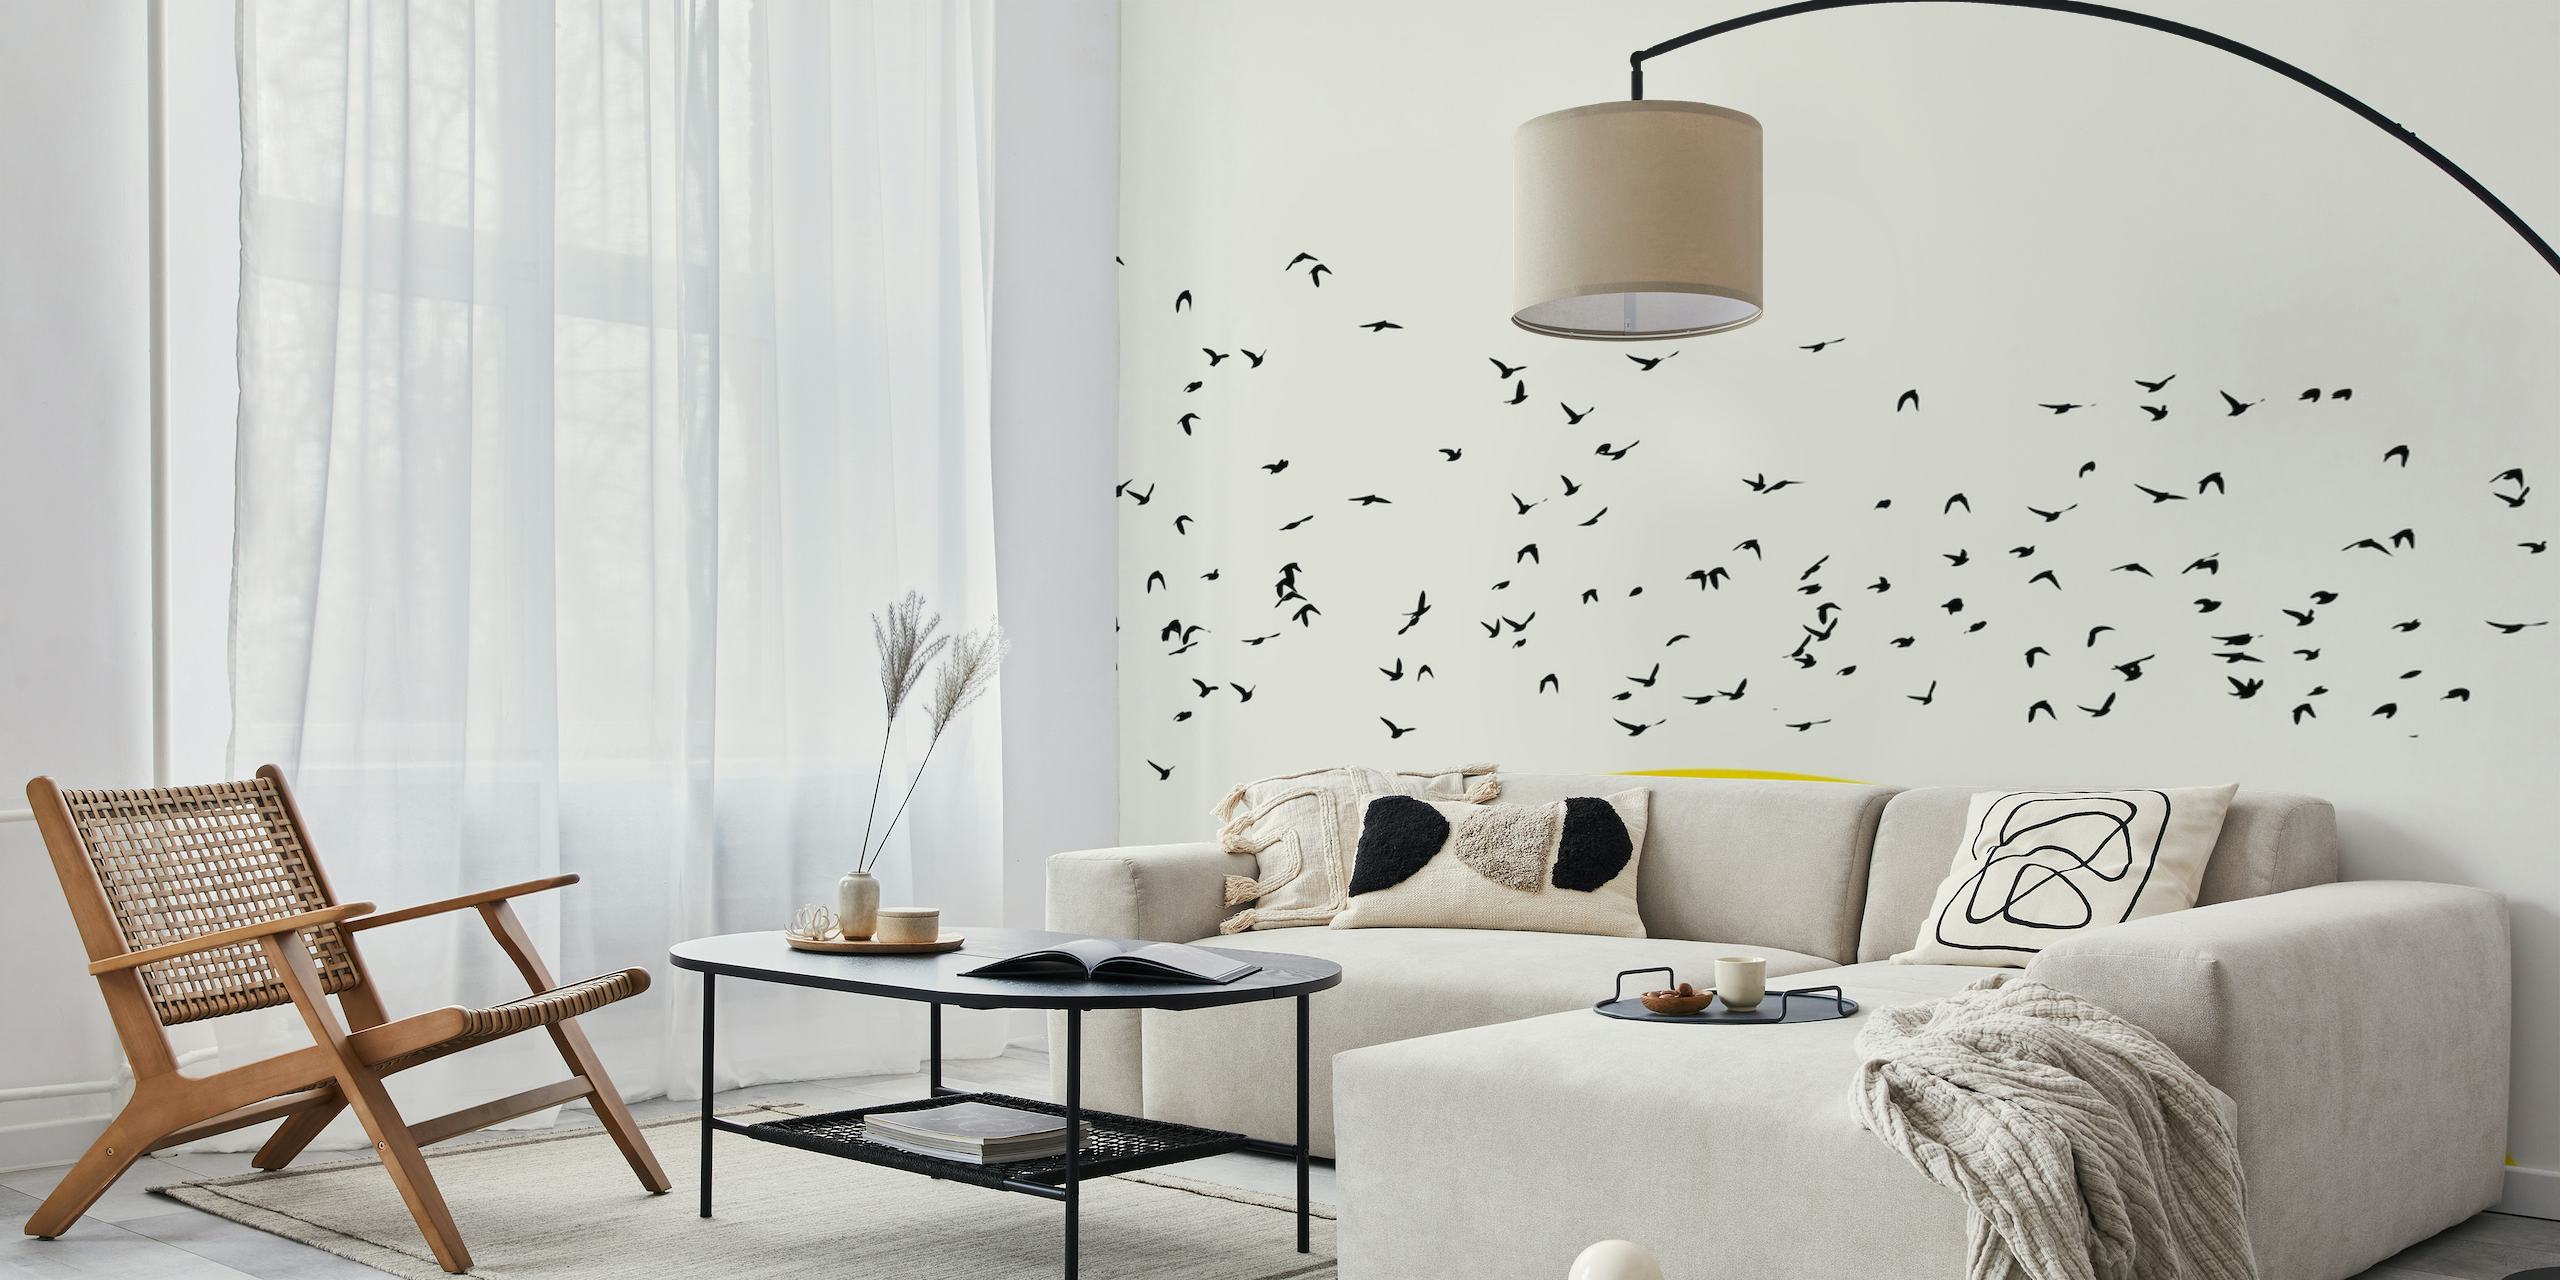 A Thousand Birds papiers peint